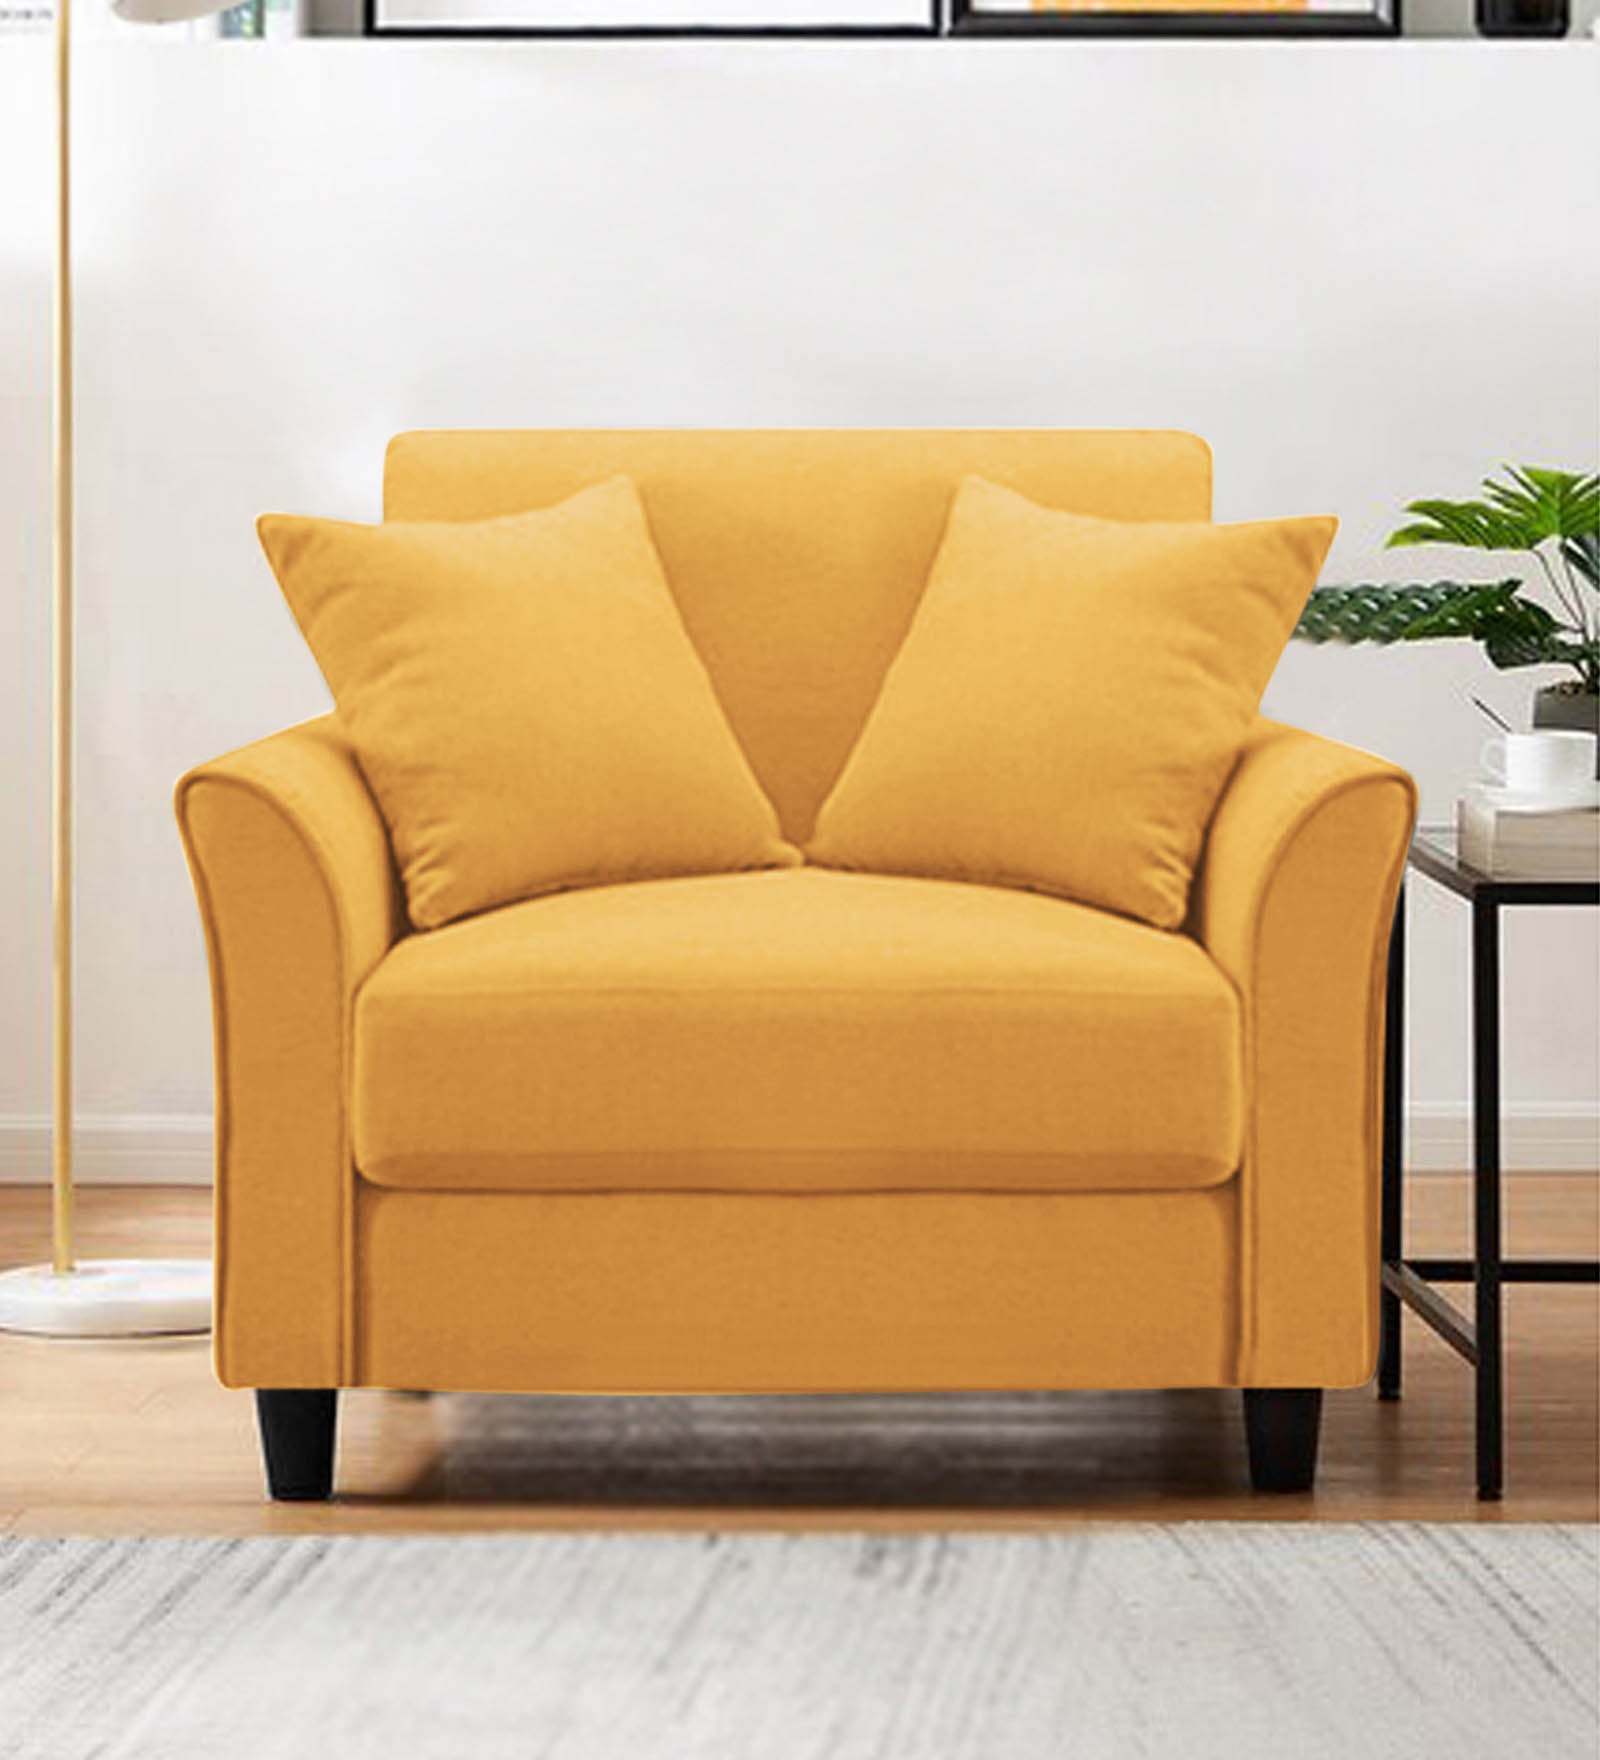 Daroo Velvet 1 Seater Sofa in Turmeric yellow Colour